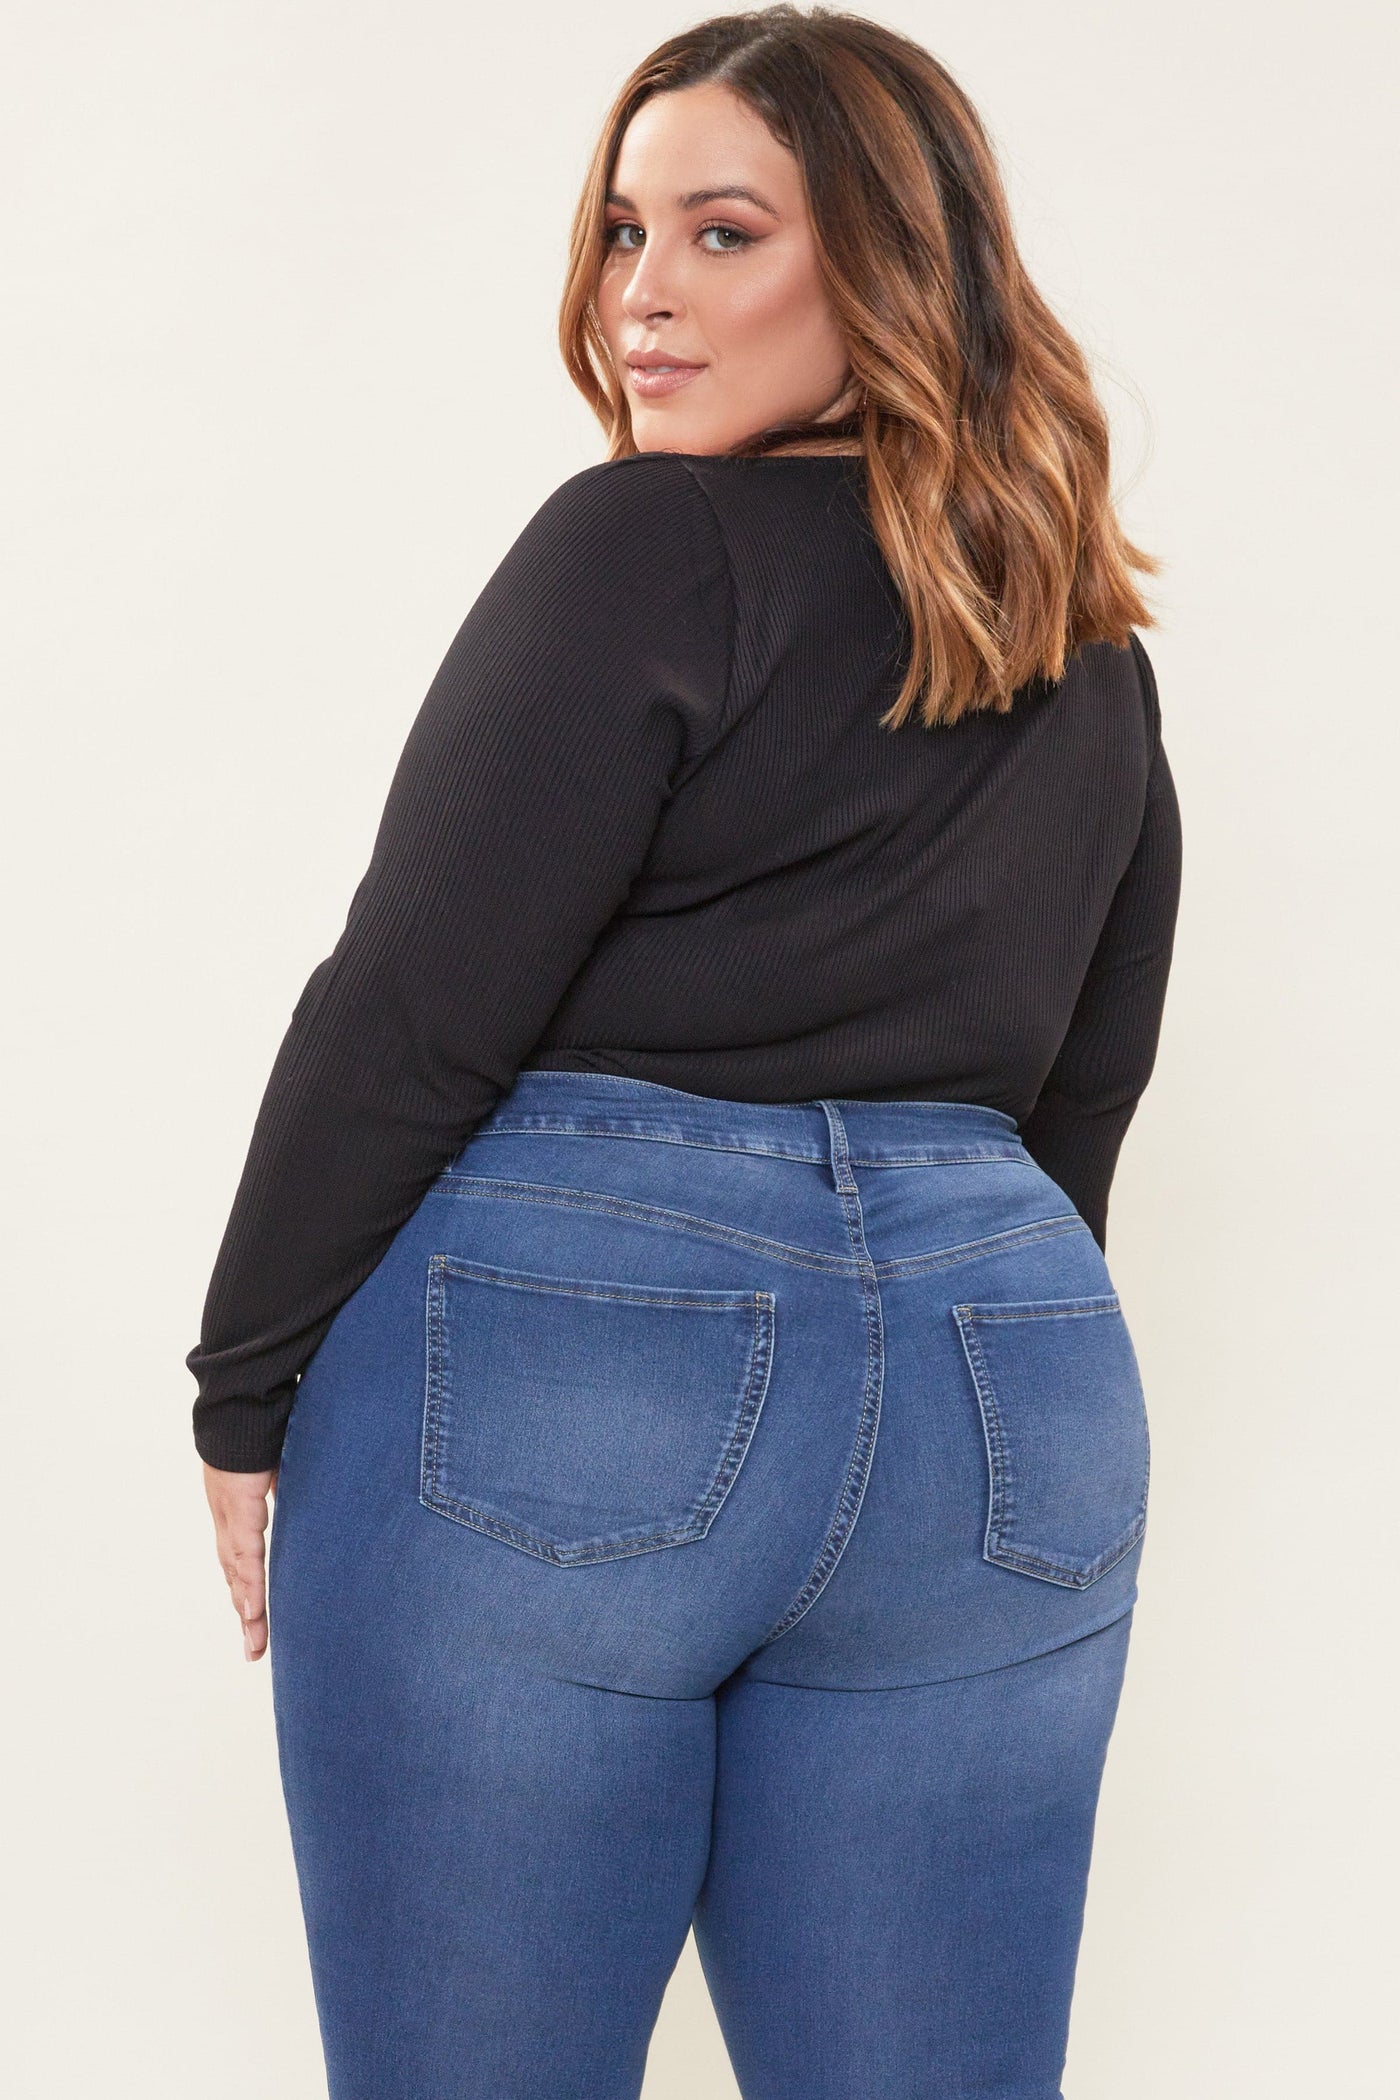 Women's Plus Size Hyperdenim Super Stretchy Jean